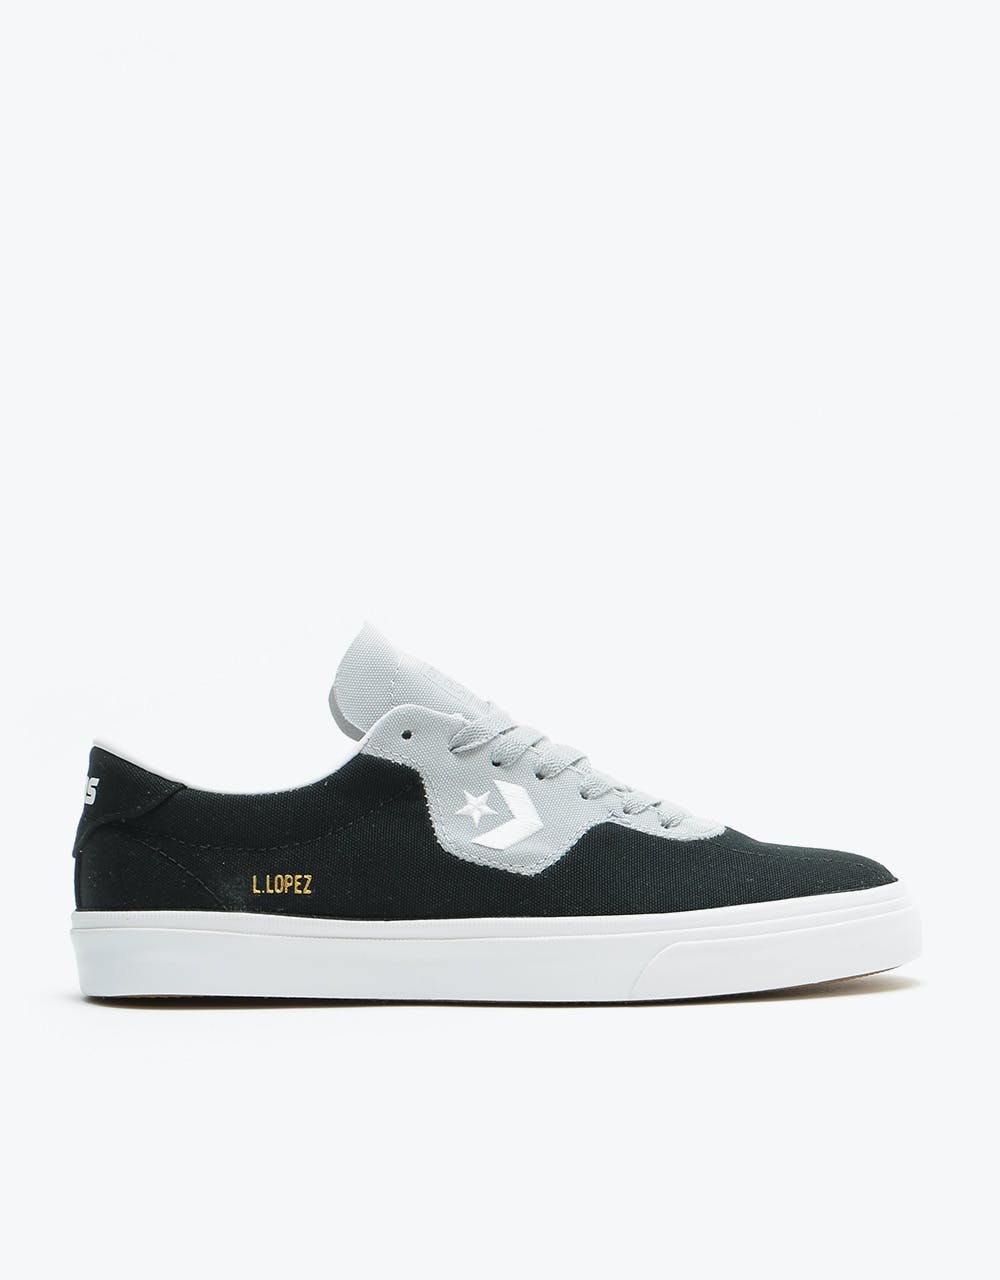 Converse Louie Lopez Pro Ox Skate Shoes - Black/Wolf Grey/White